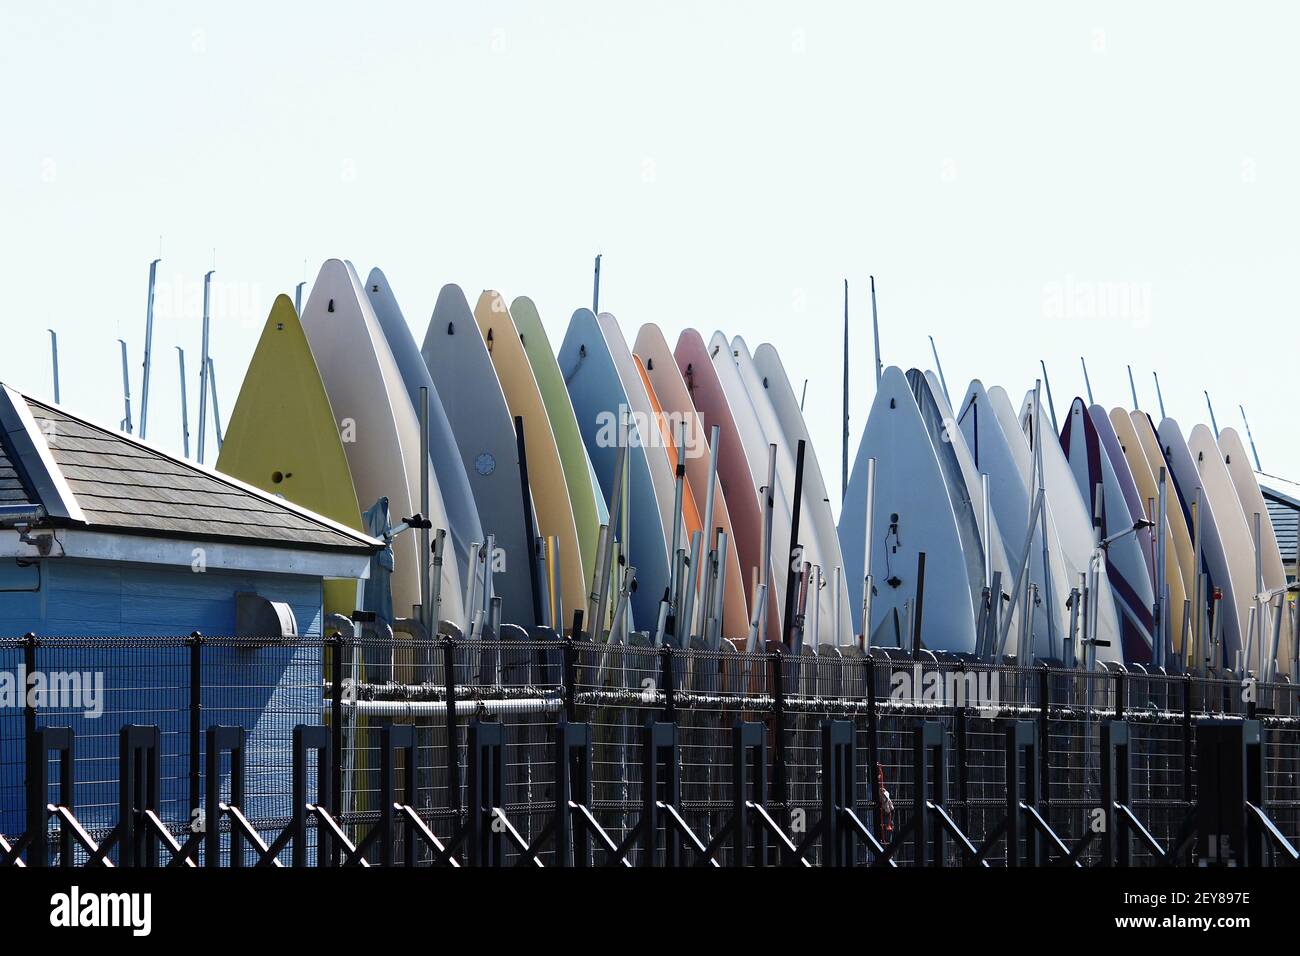 Marina boat yard with lots of windsurf boards Stock Photo